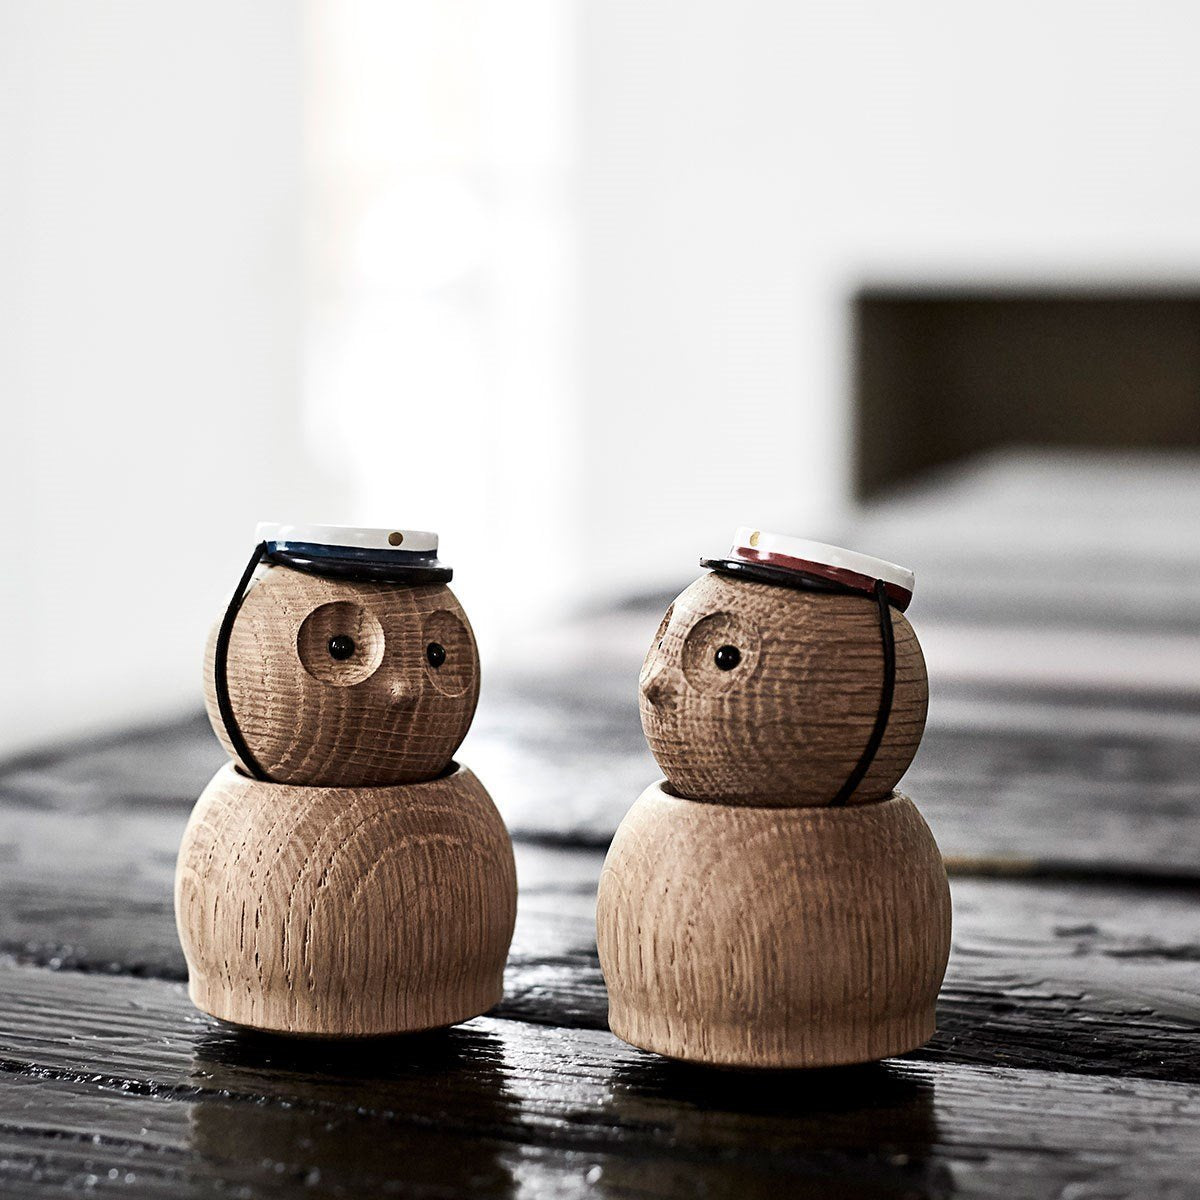 Andersen Furniture Wooden Owl, dub, velký